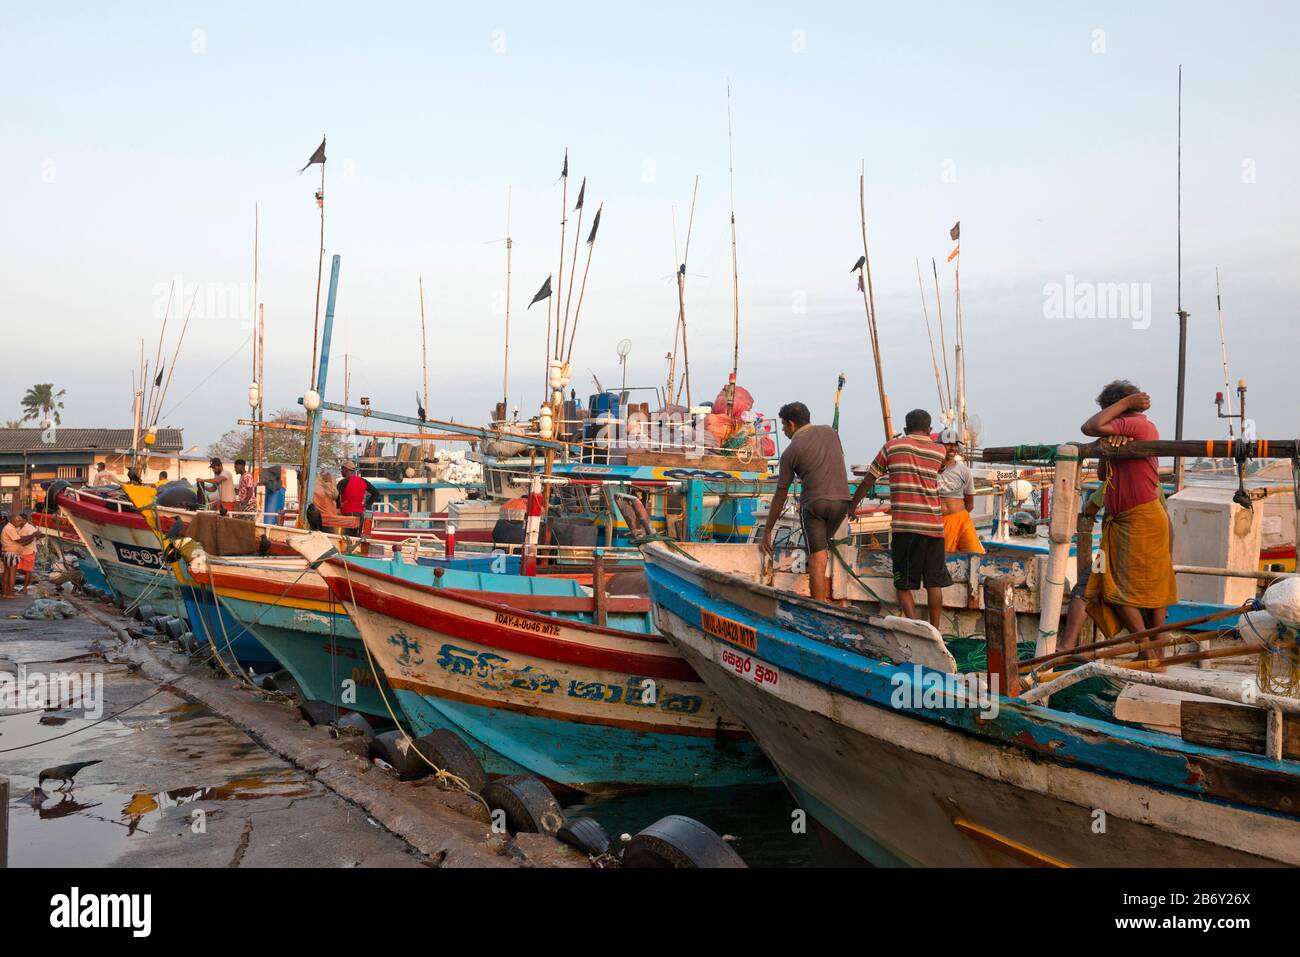 Sri Lanka, Negombo, ville, Stadt, city, marché, Markt, market, bateau de pêche Fischerboot, fischer boat Stock Photo